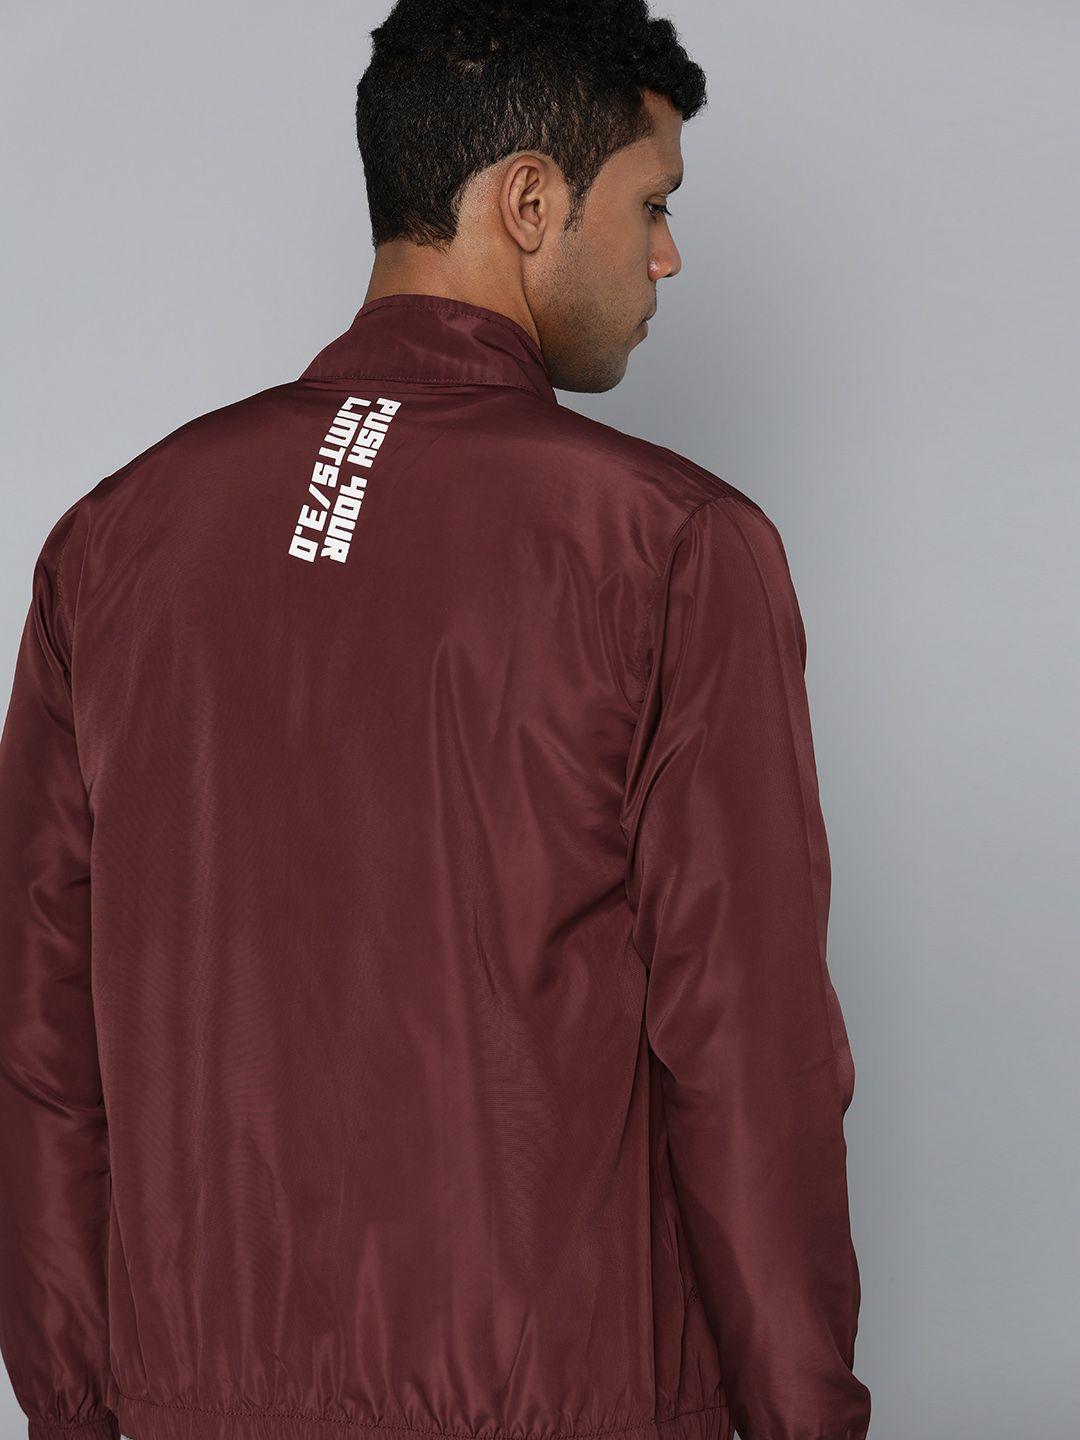 hrx by hrithik roshan rapid-dry brand logo print detail tailored jacket